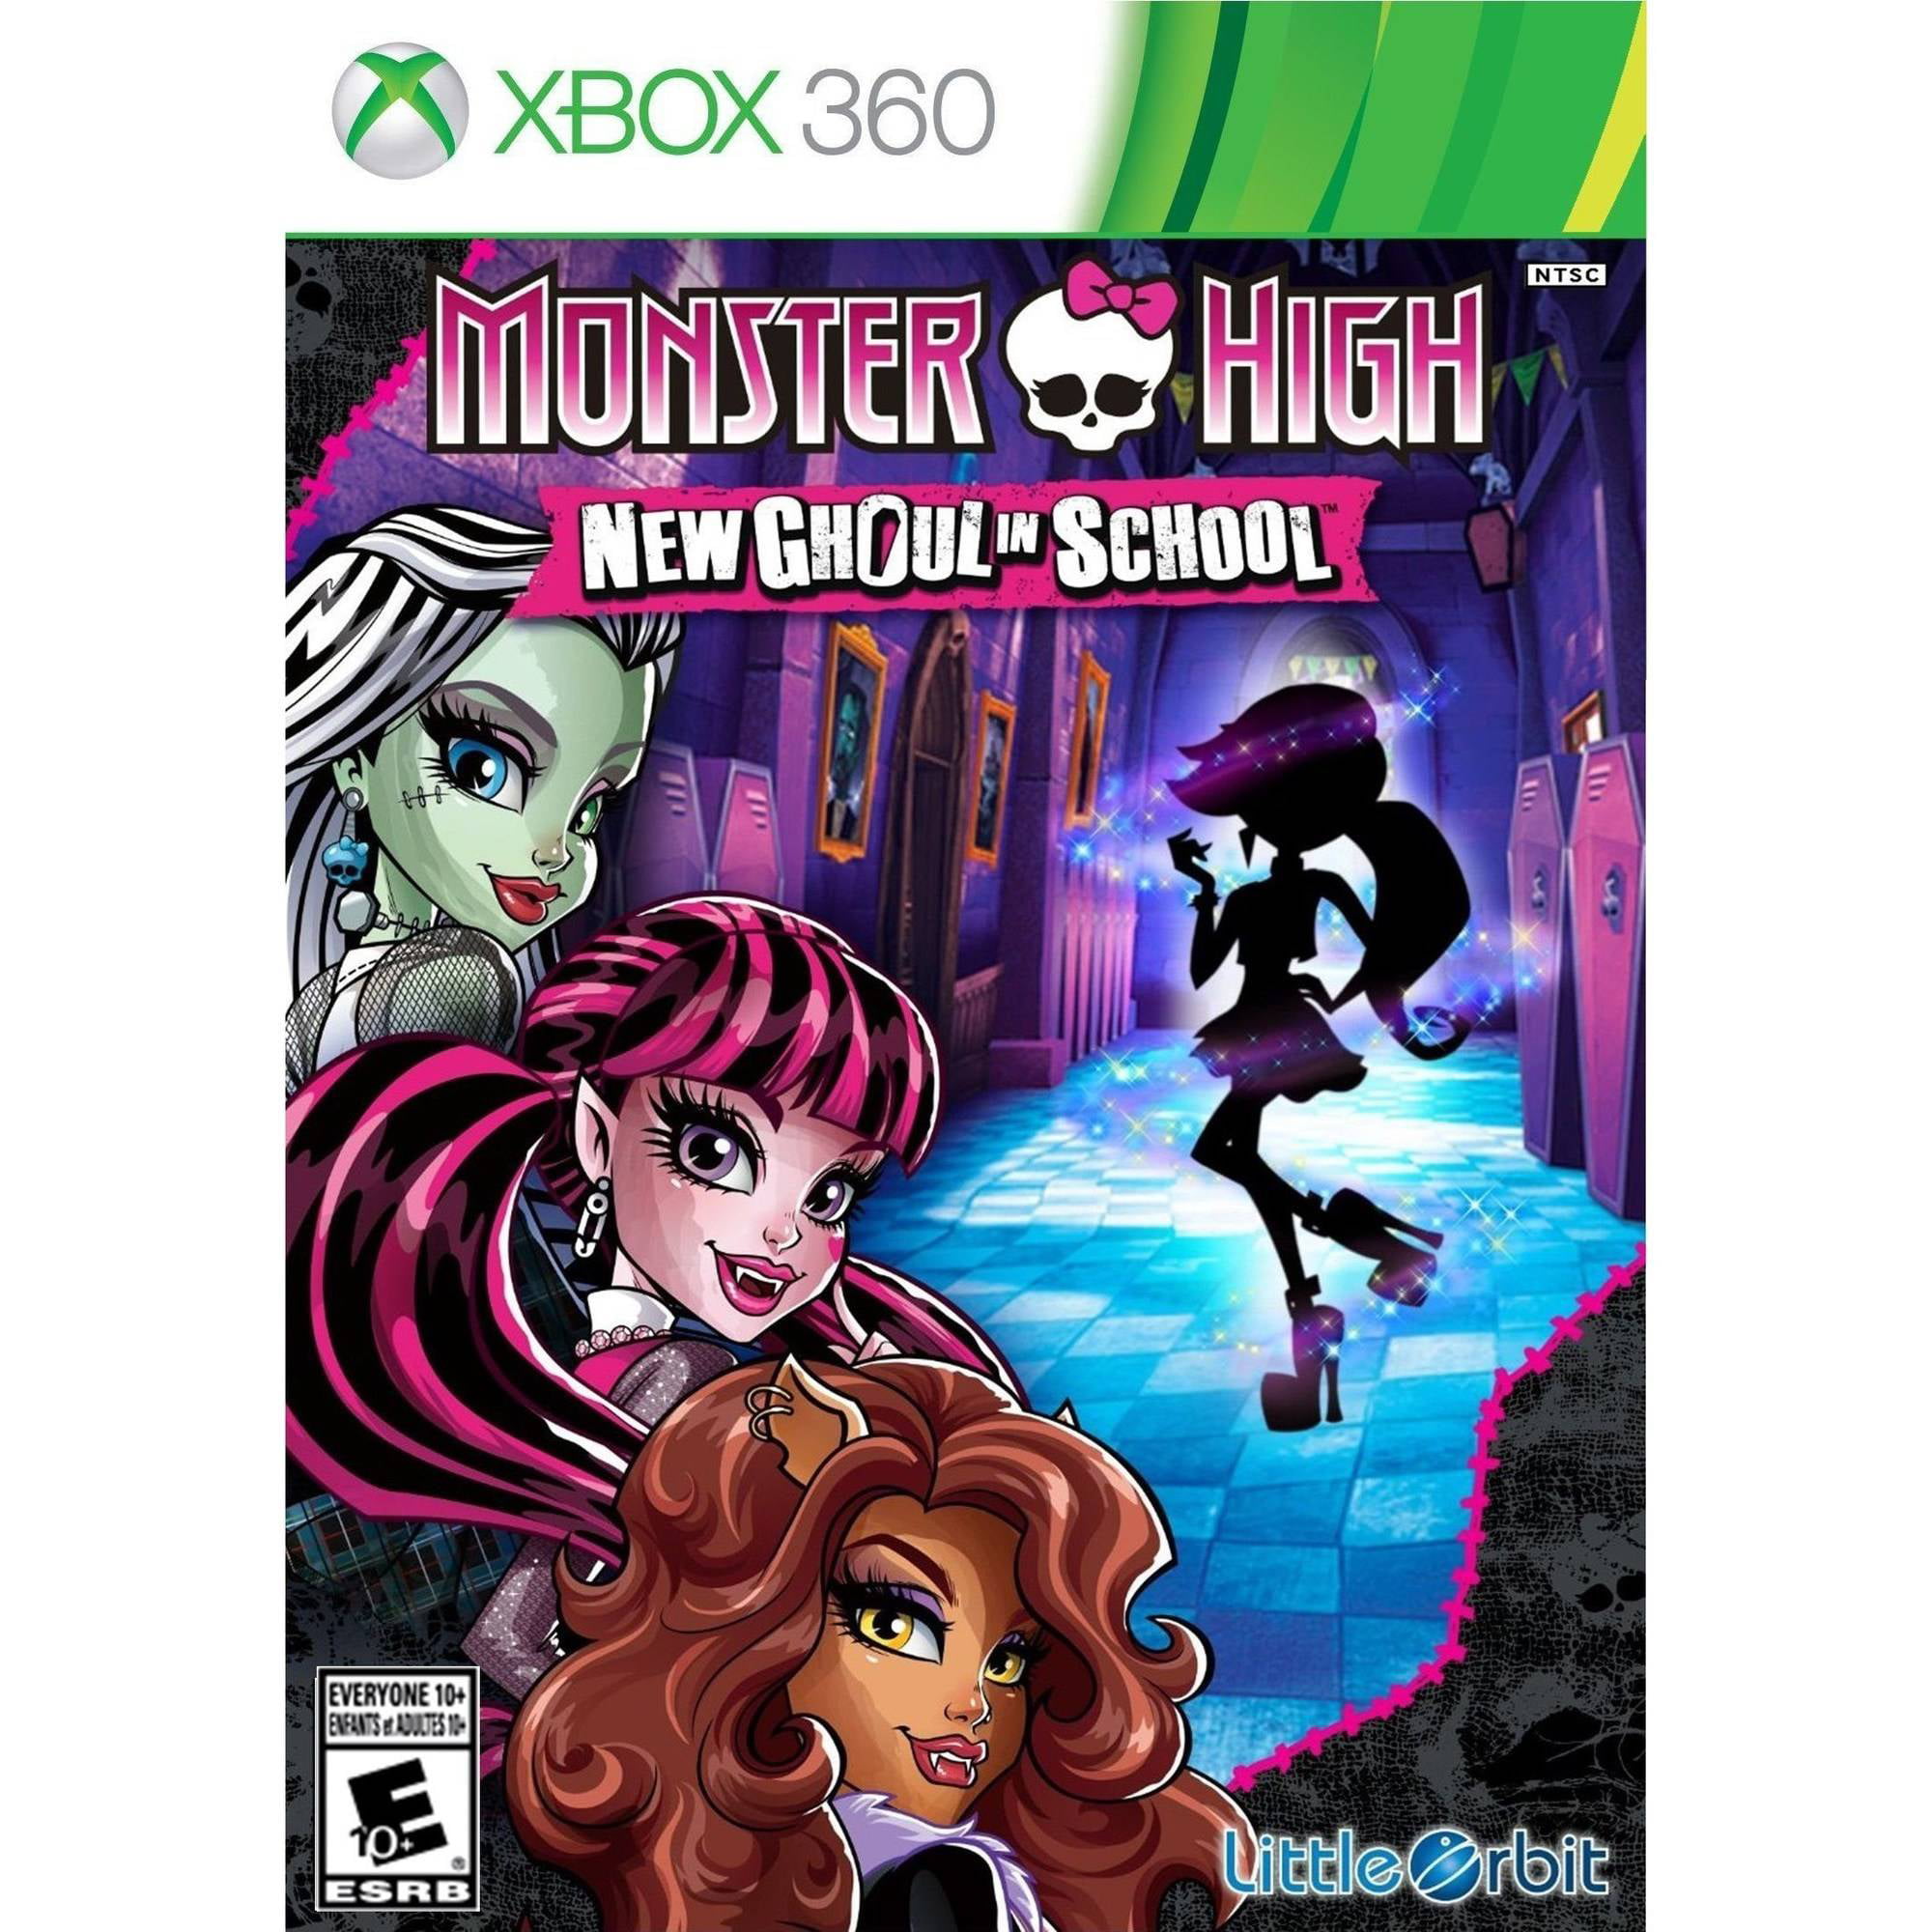 Пошли хай. Monster High новая нечисть школы xbox360. Игра Monster High New Ghoul. Игра монстр Хай на ПК. Школа Монстер Хай игра.